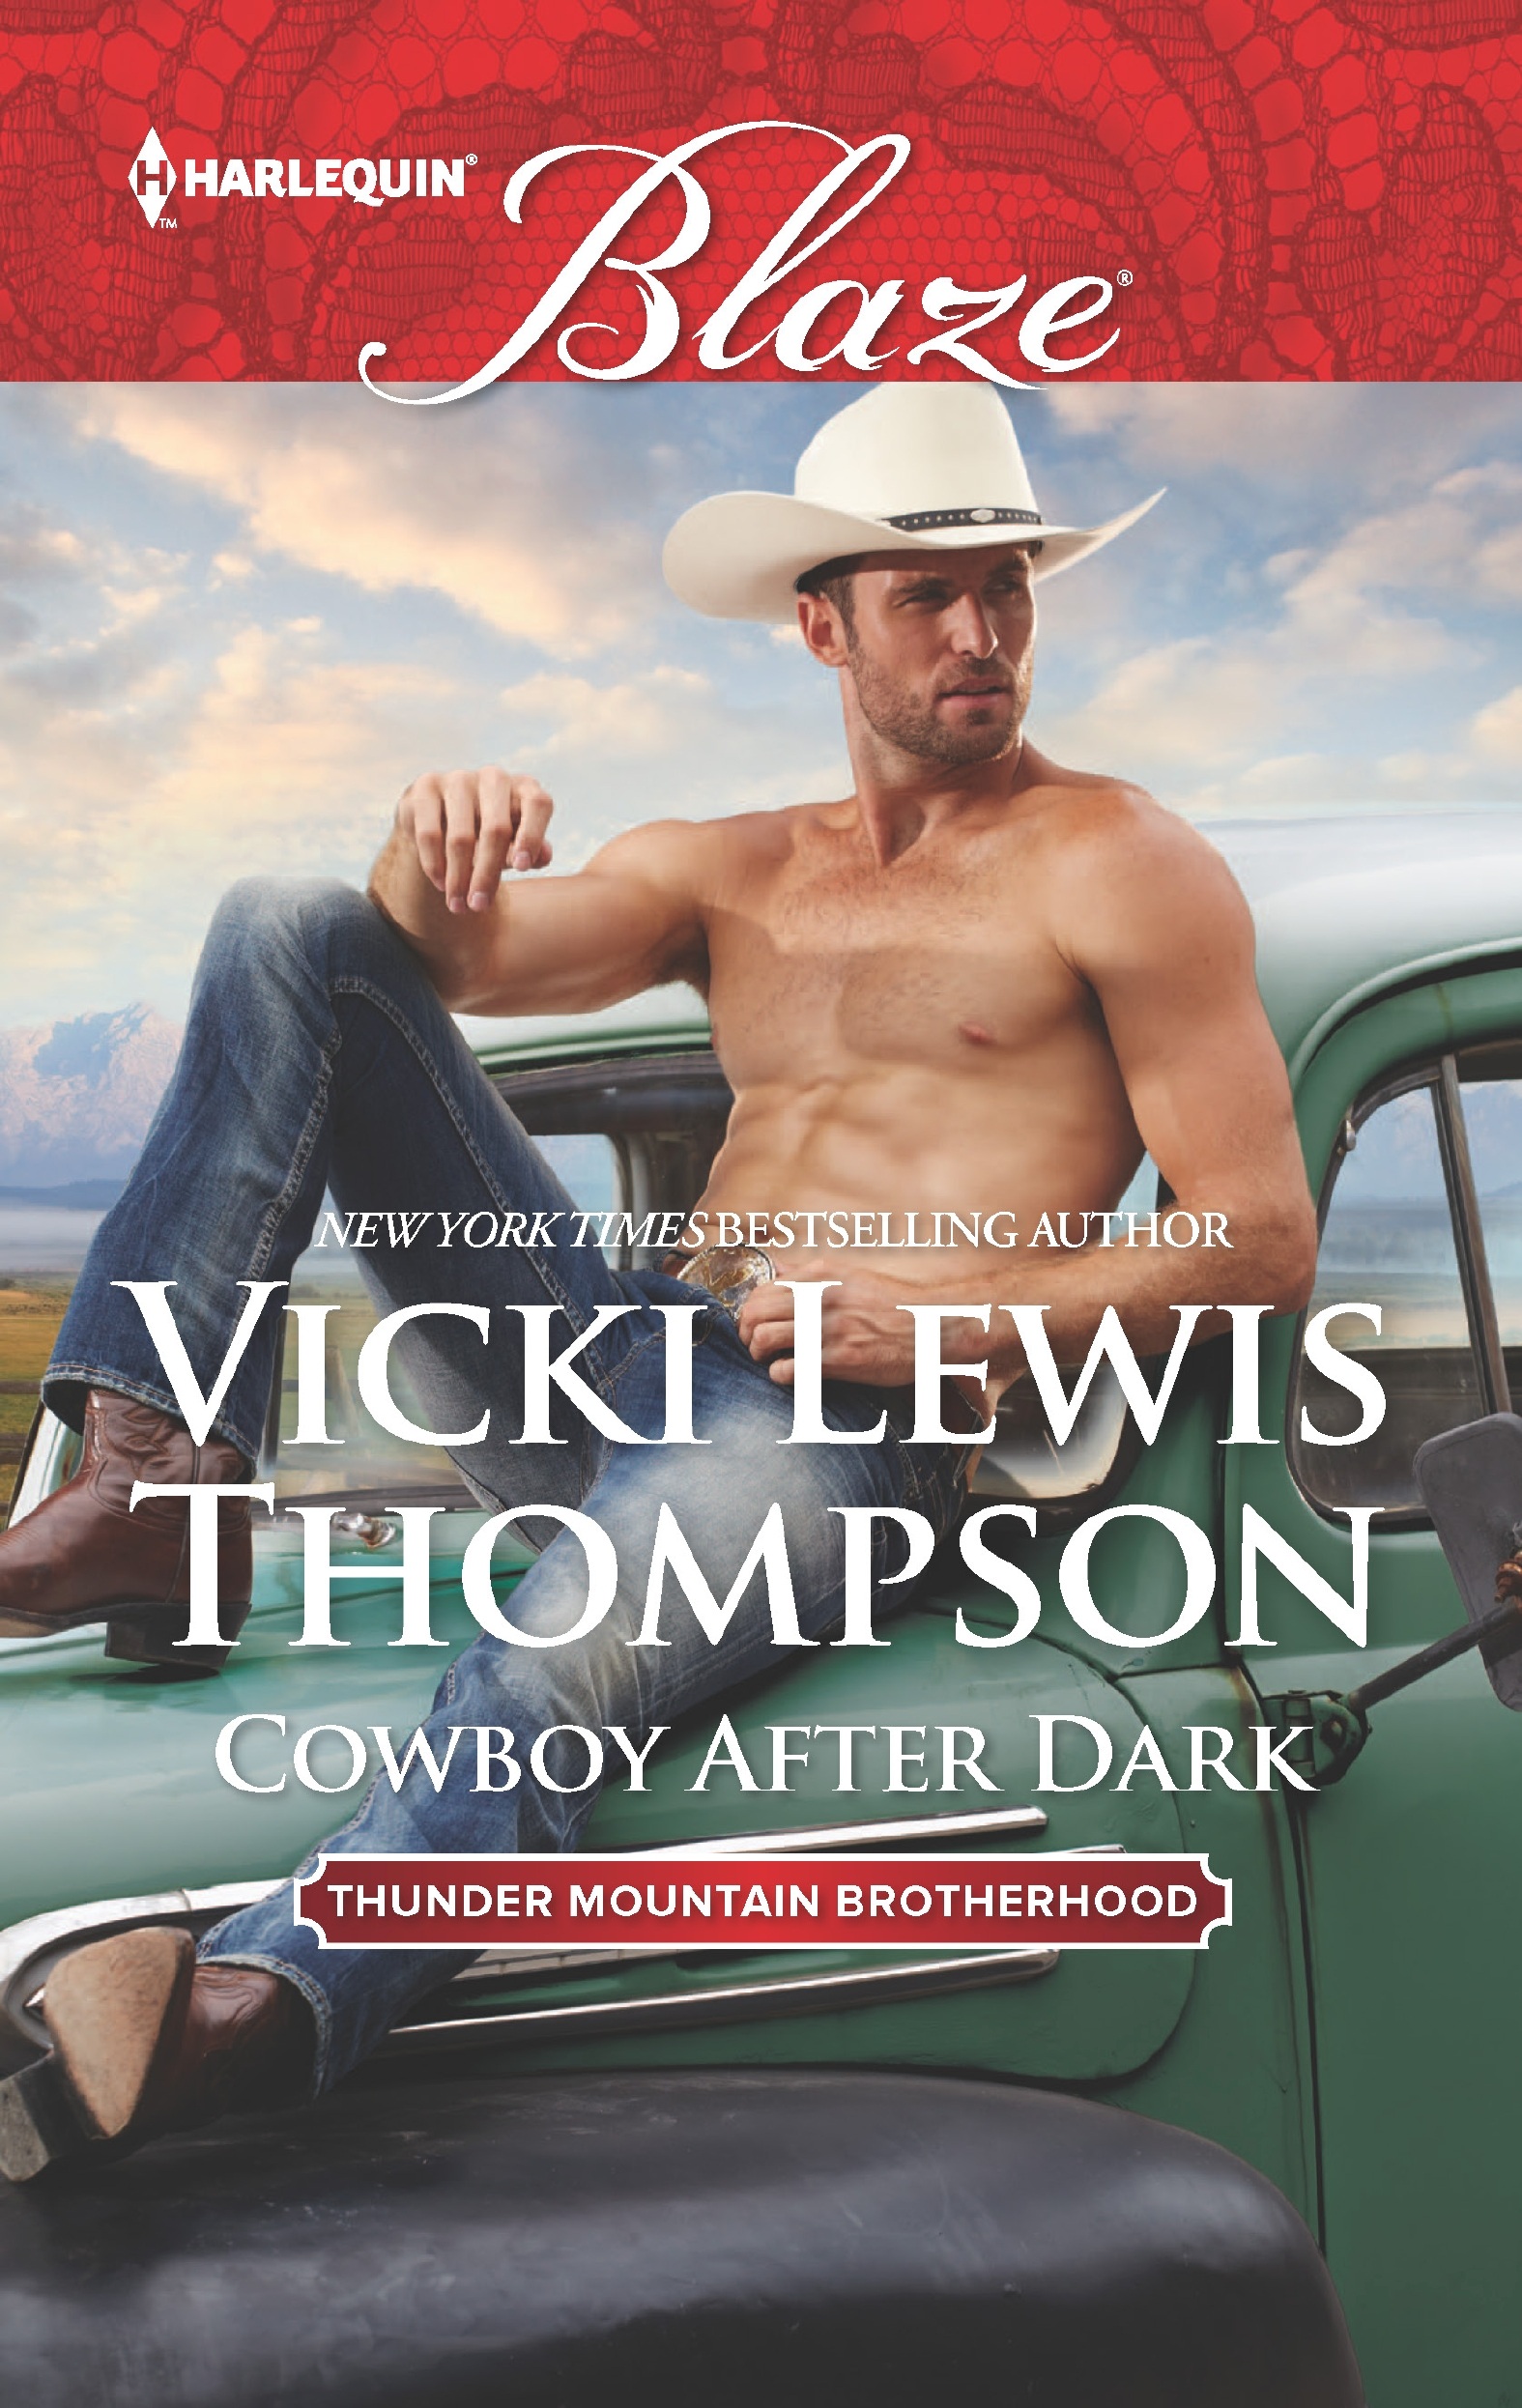 Cowboy After Dark (2016) by Vicki Lewis Thompson